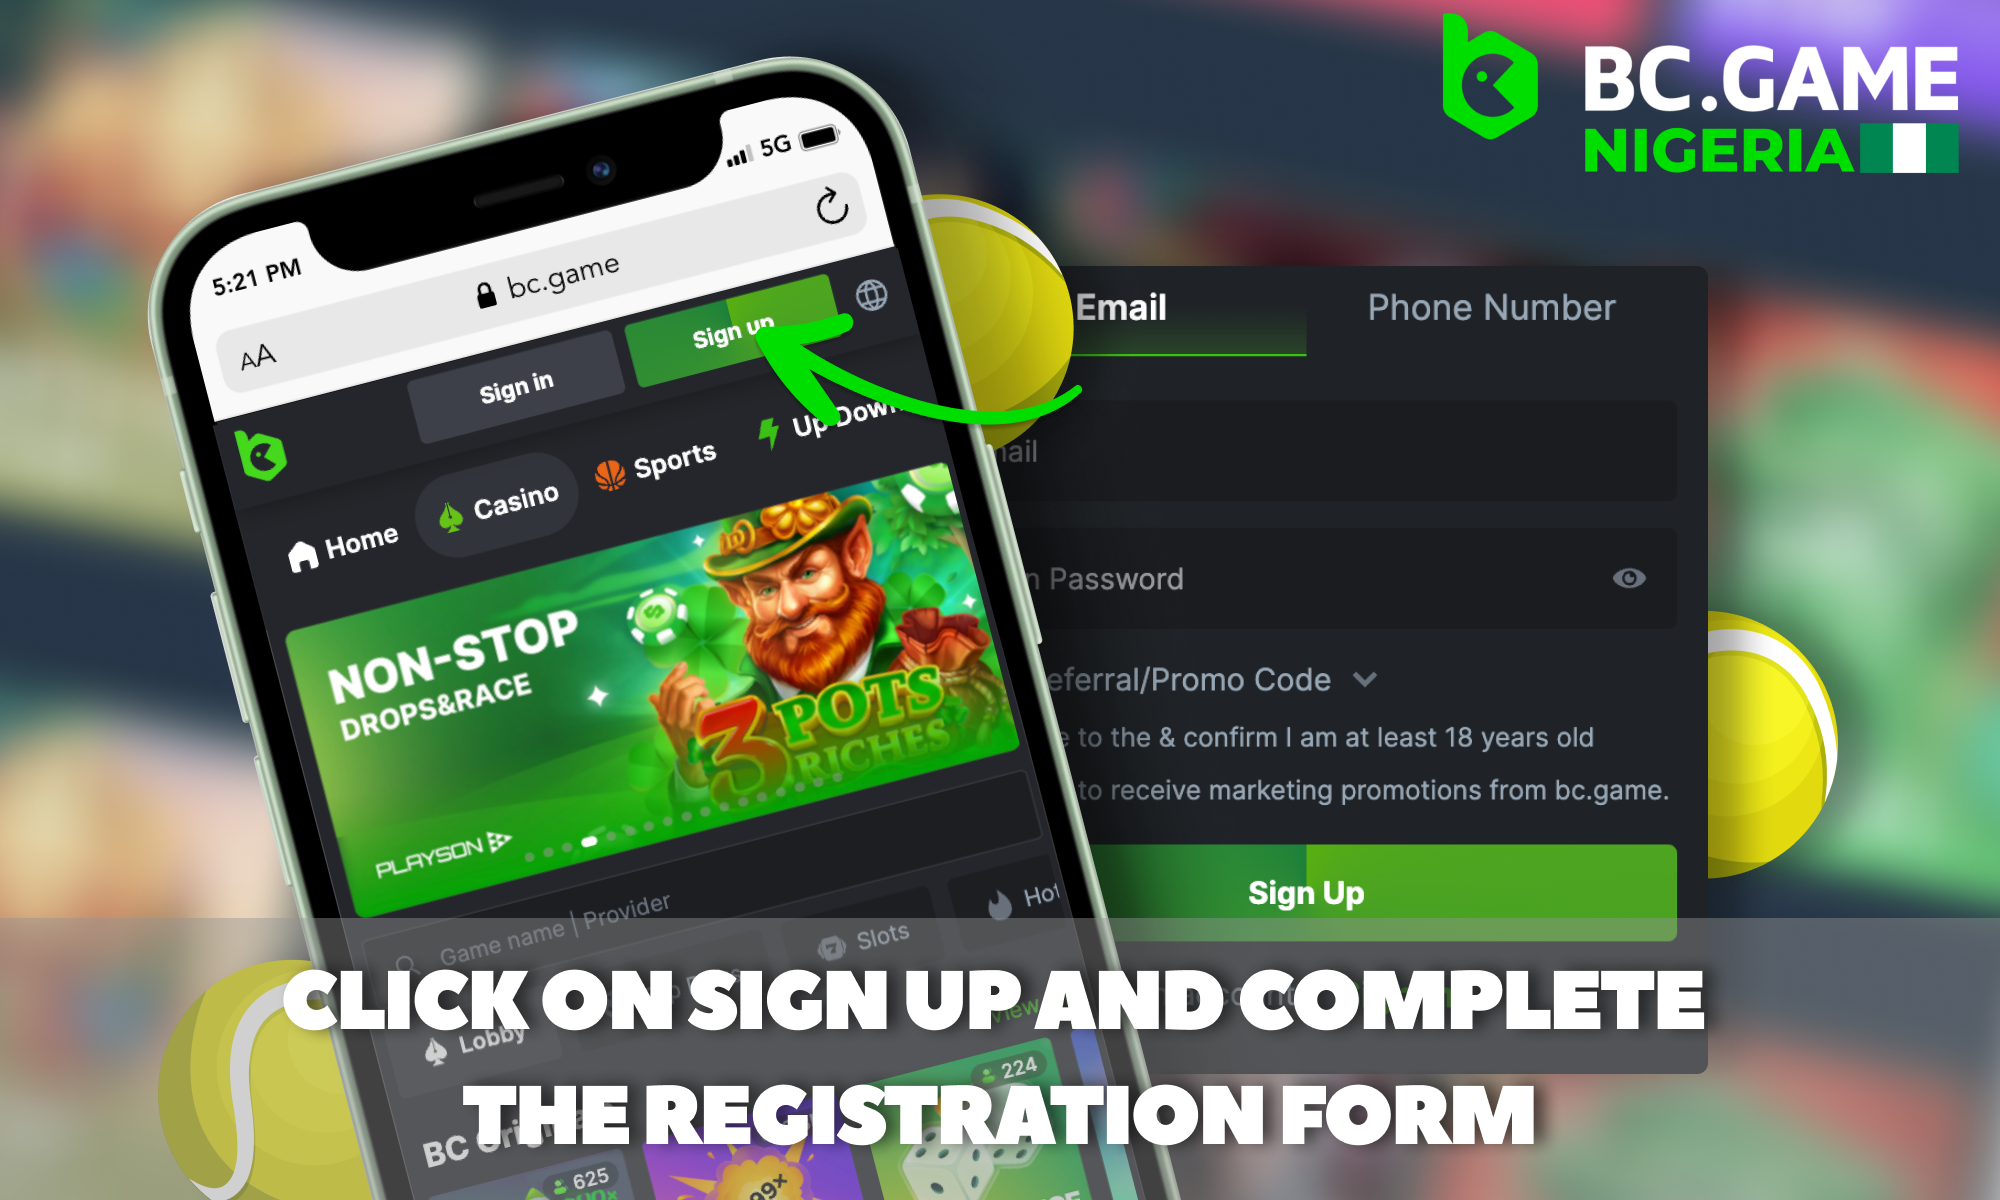 Sign up at the BC Game Nigeria